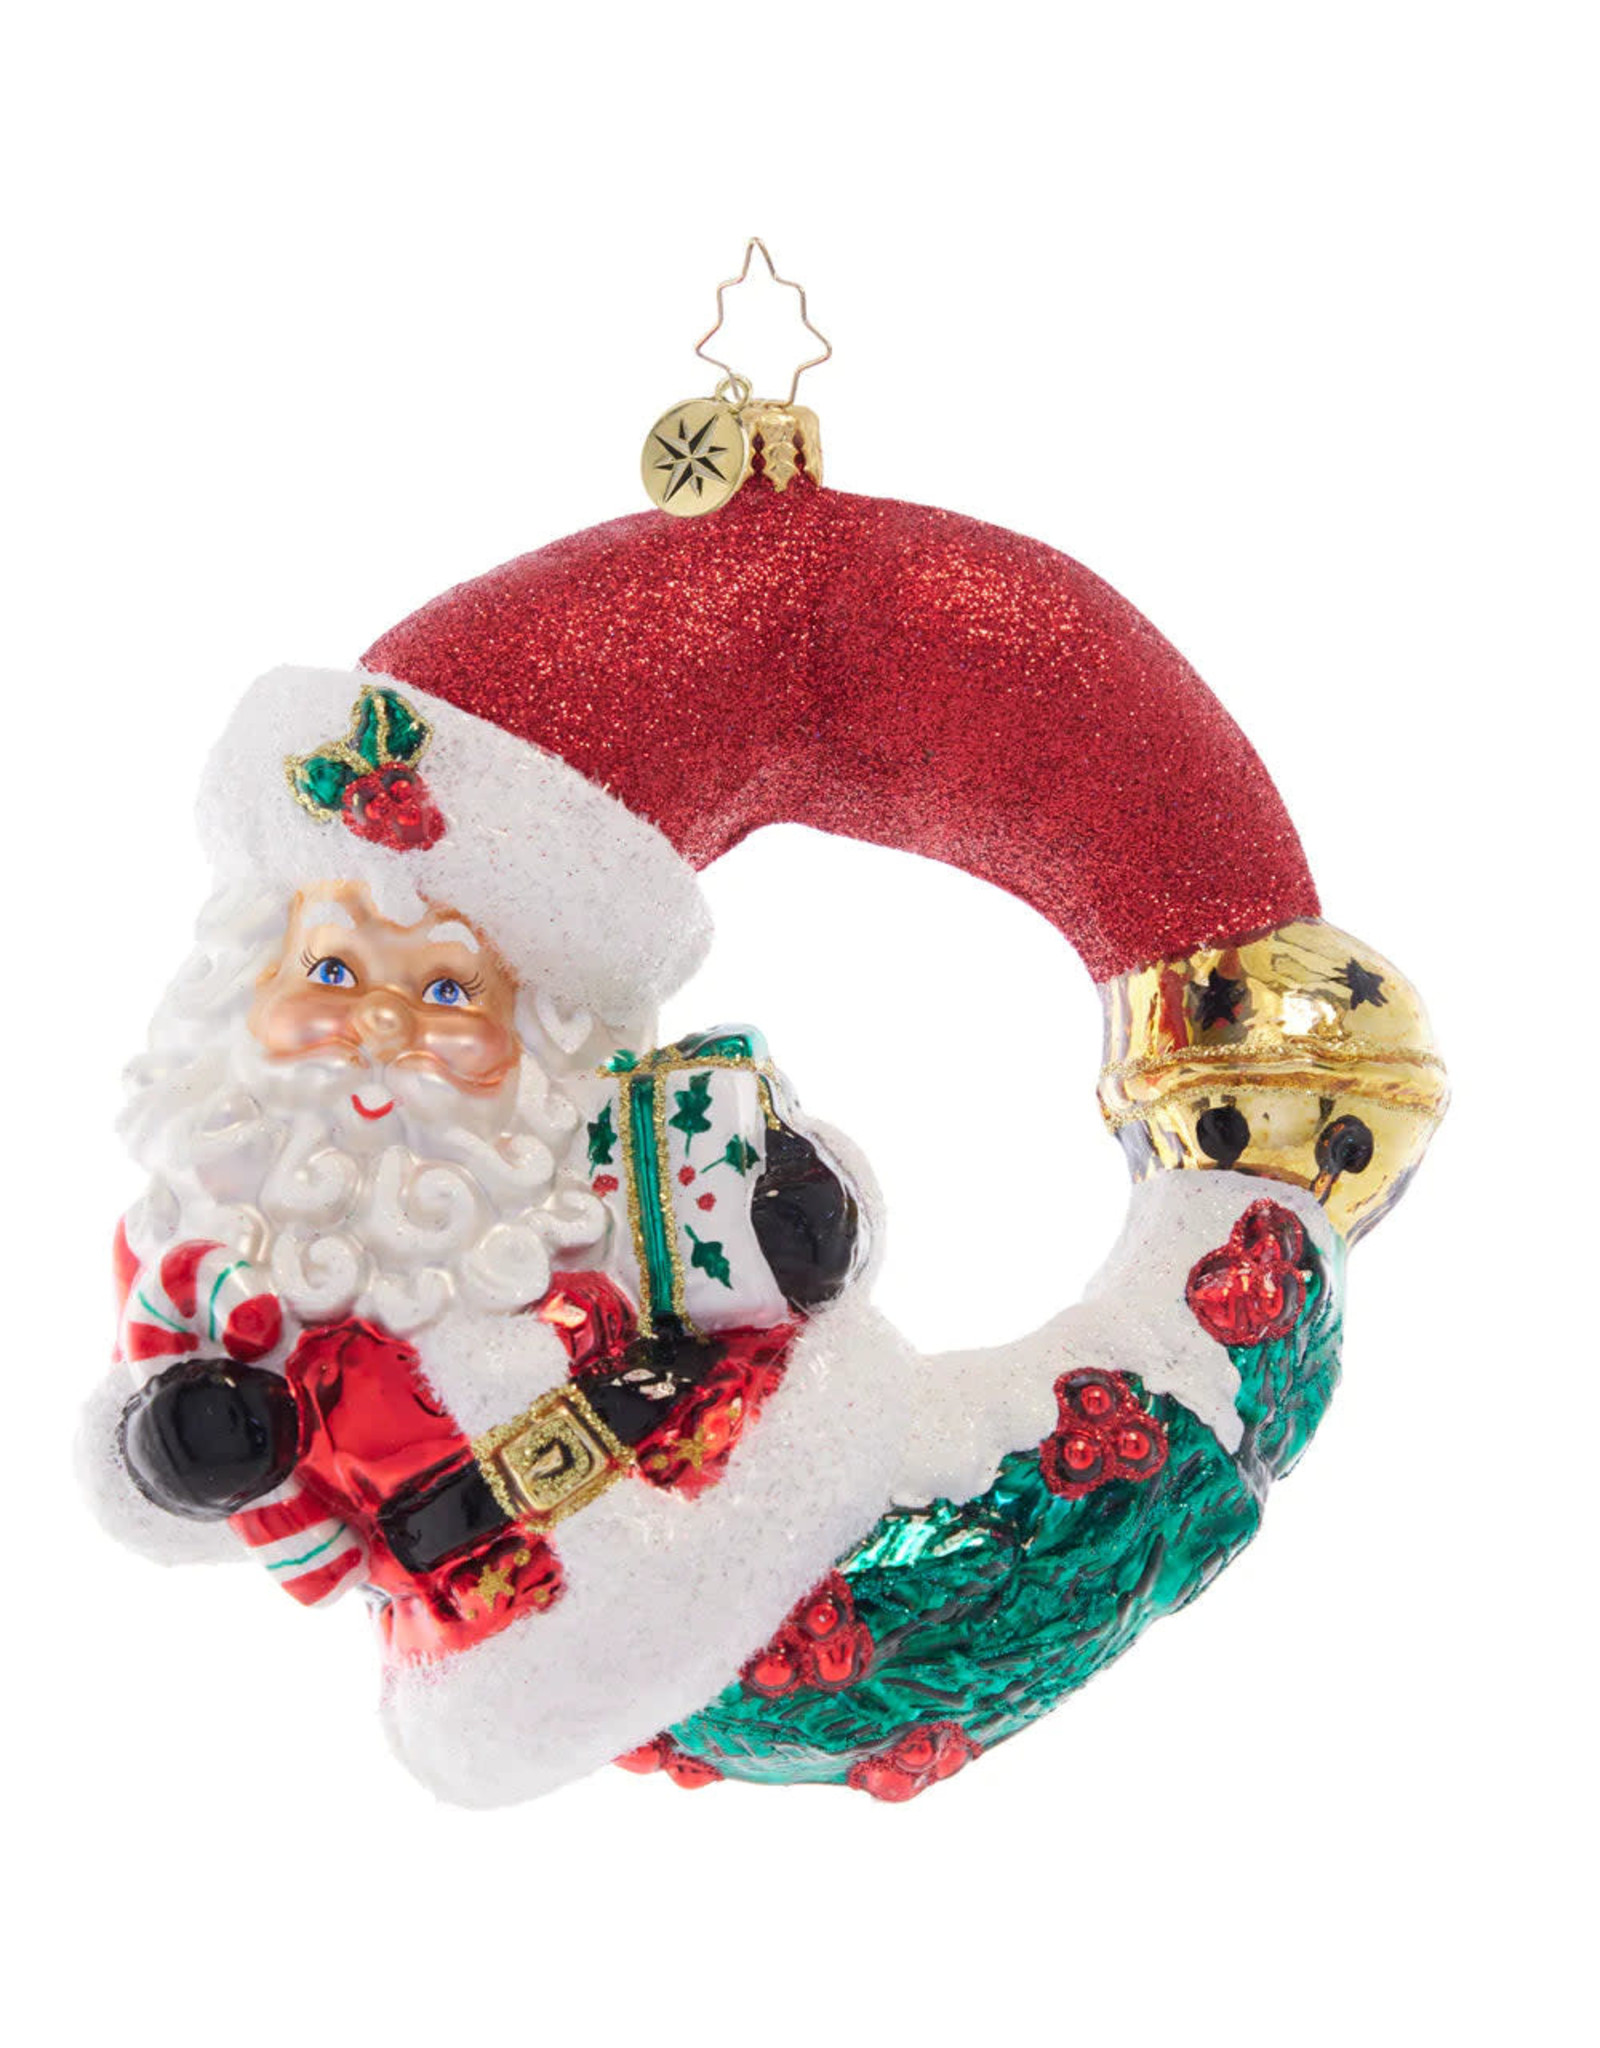 Christopher Radko Christmas Wishes Santa Wreath Christmas Ornament